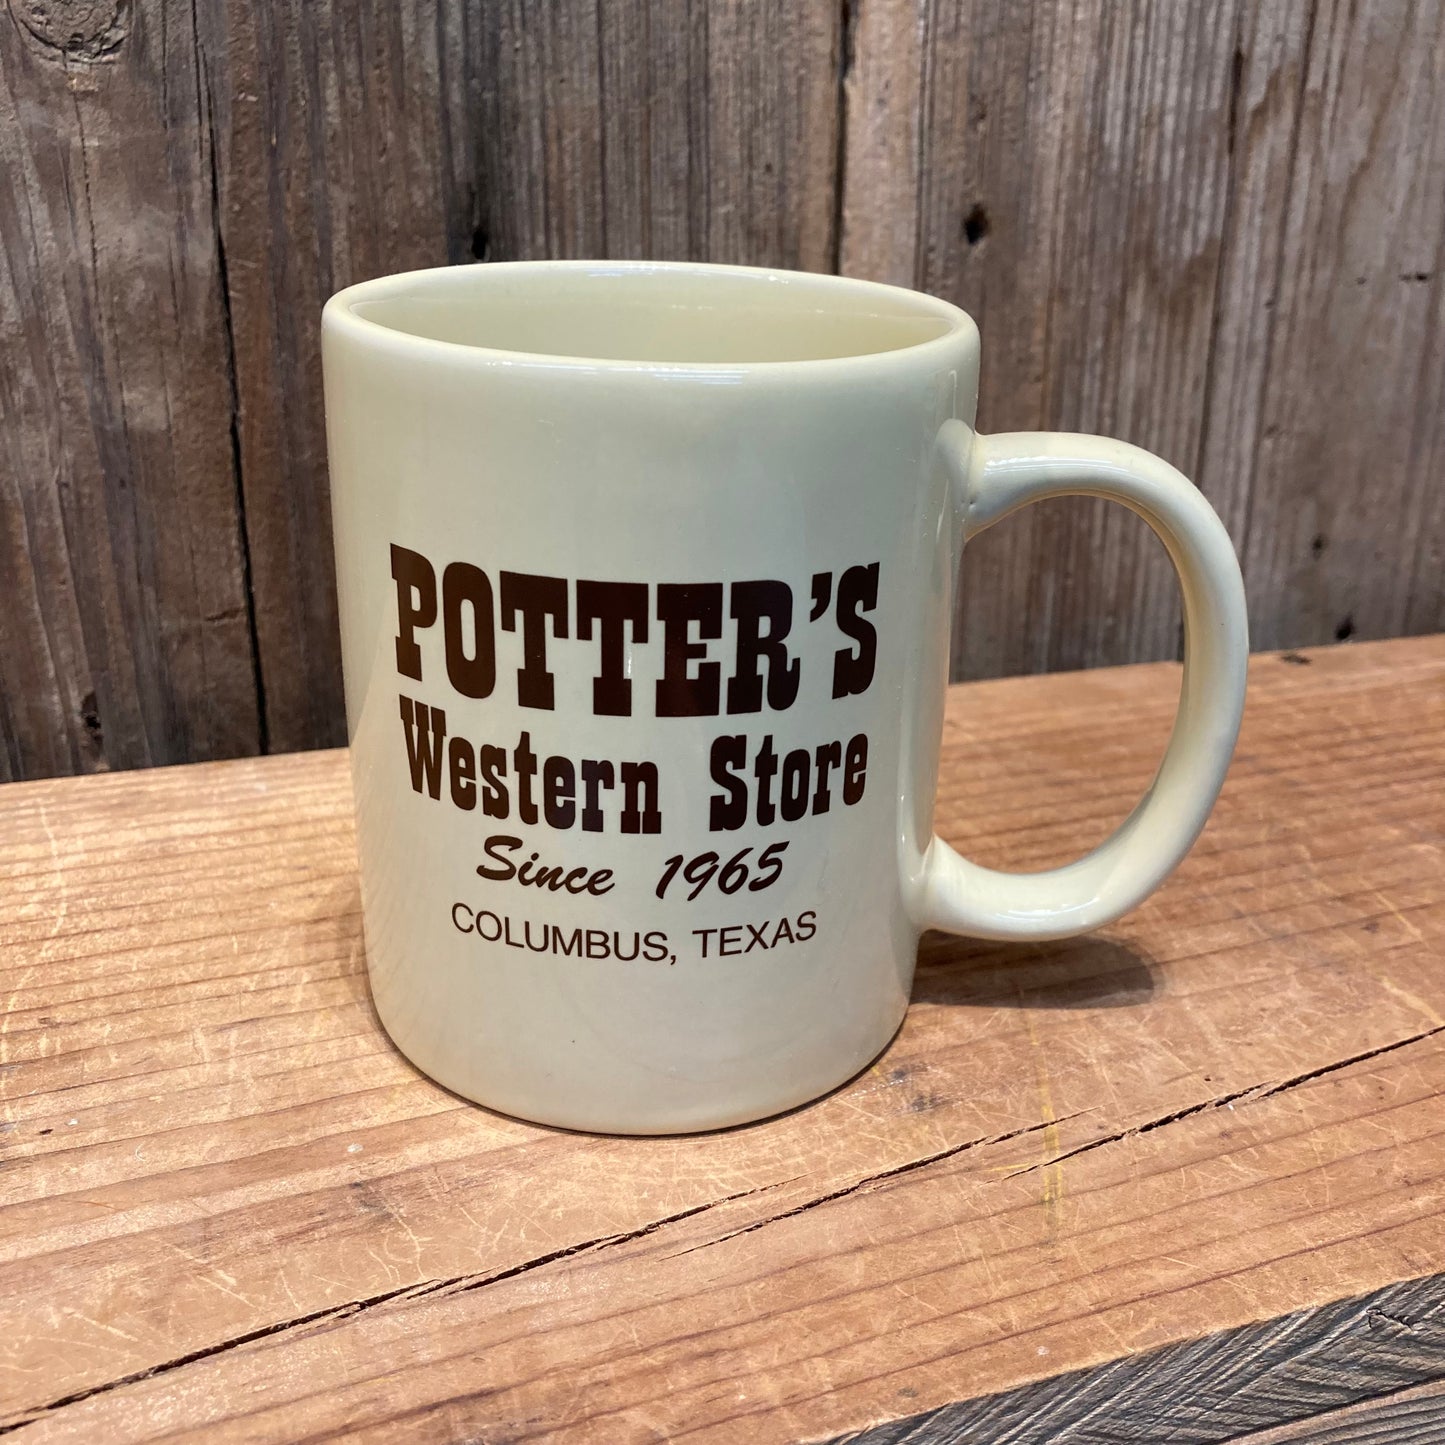 Potter's Classic Mug